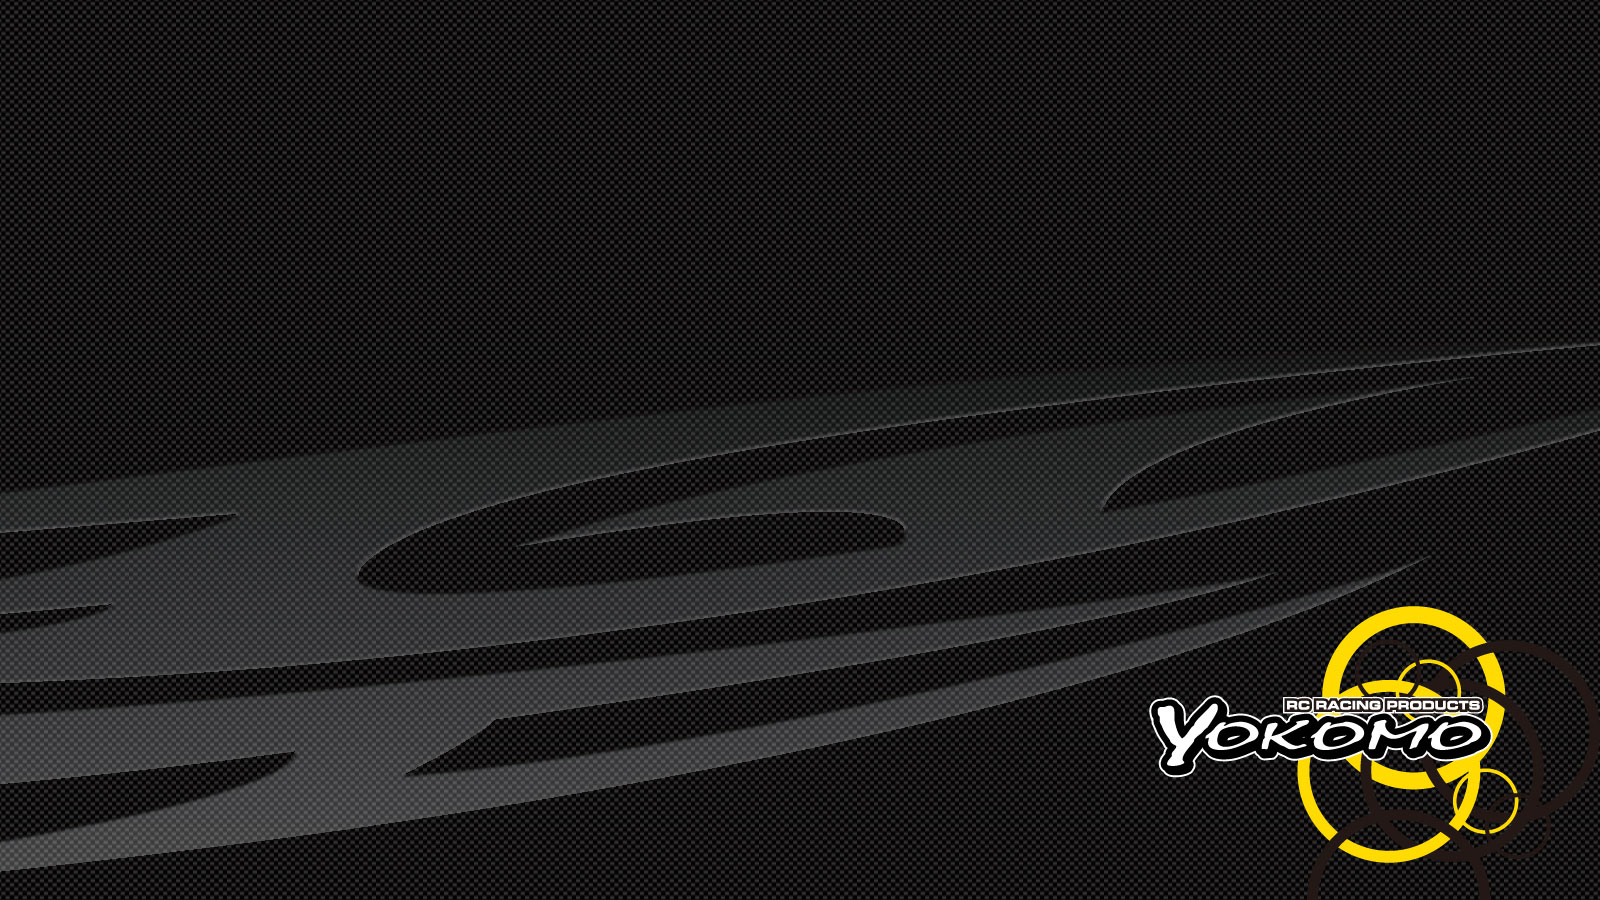 Download ラジコンカー Rcカーのヨコモ Yokomo 公式サイト